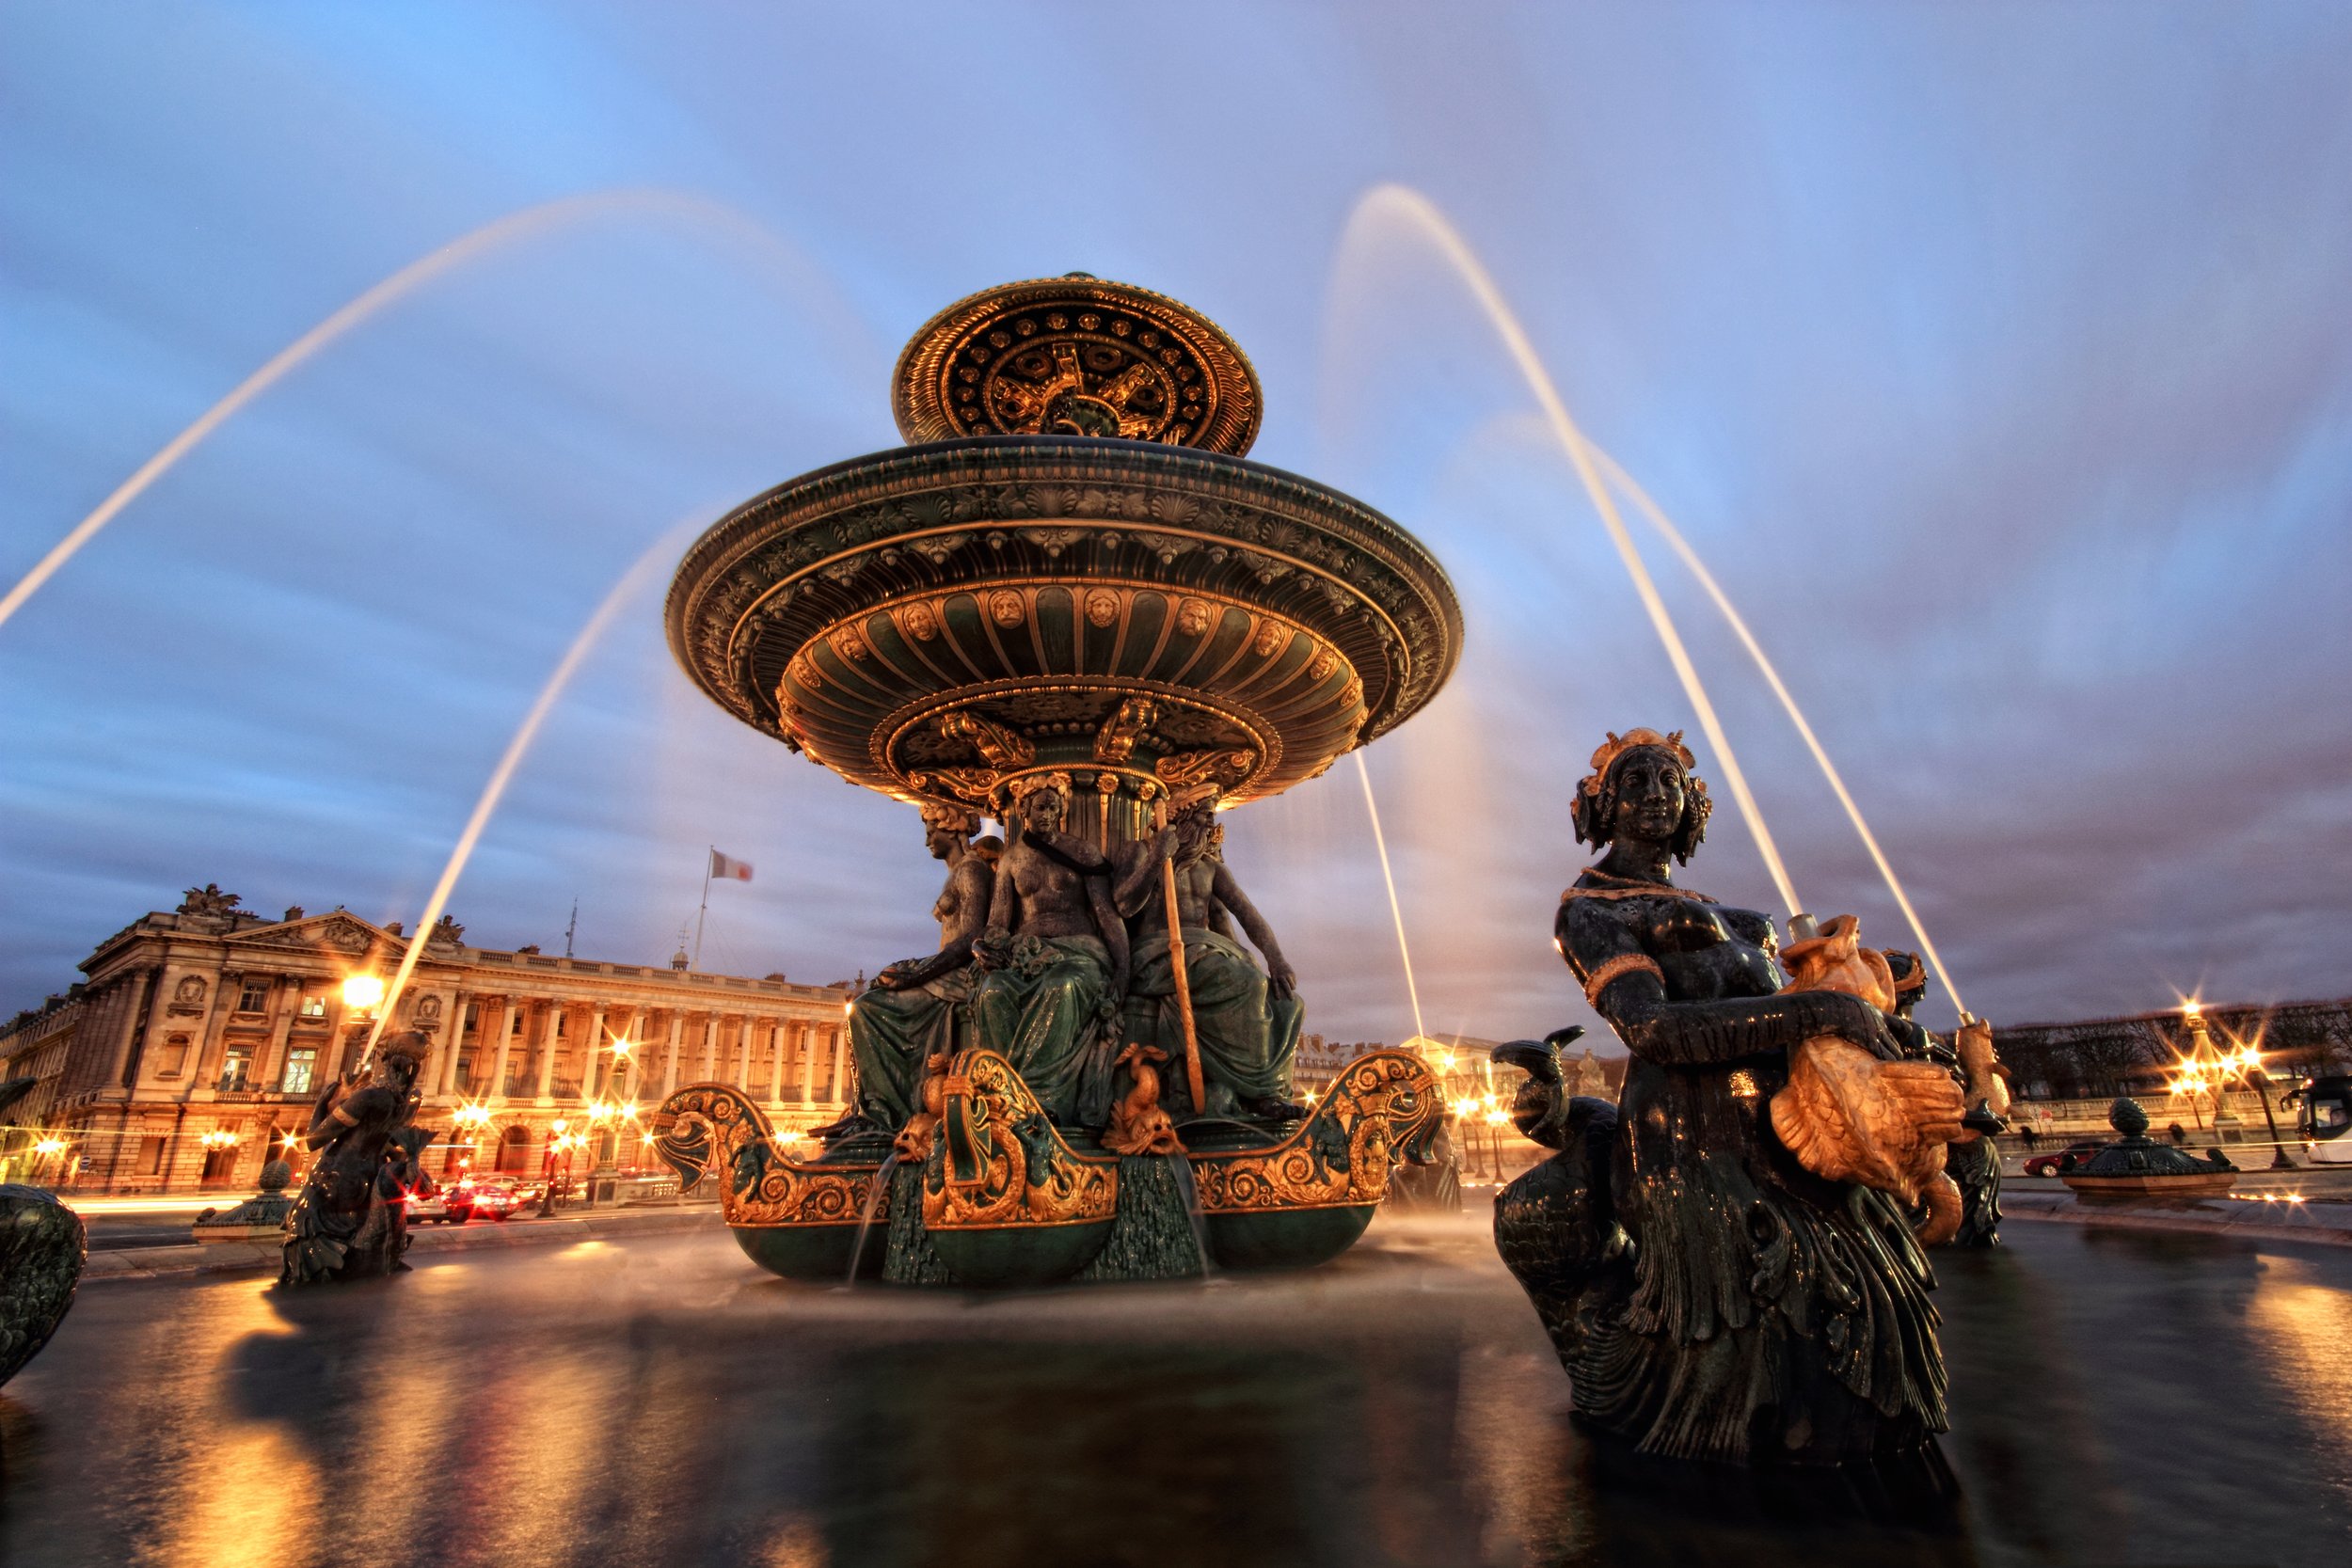 Beautiful fountain in Paris